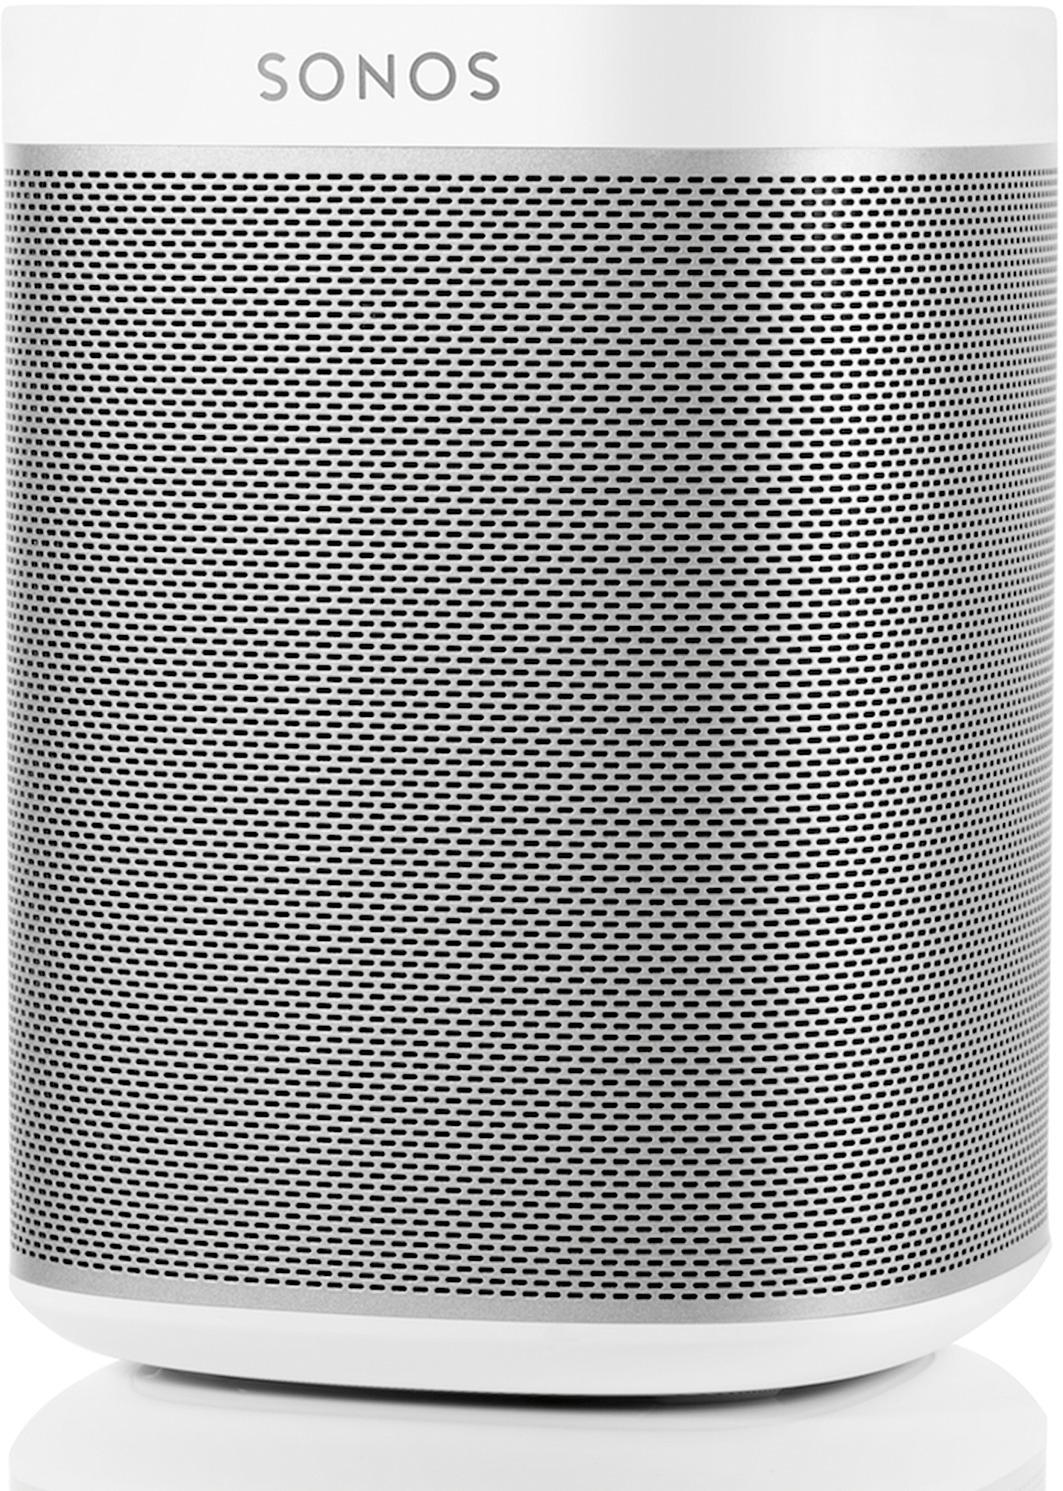 omvendt forlade Uberettiget Best Buy: Sonos Play:1 Wireless Smart Speaker for Streaming Music White  PLAY1US1